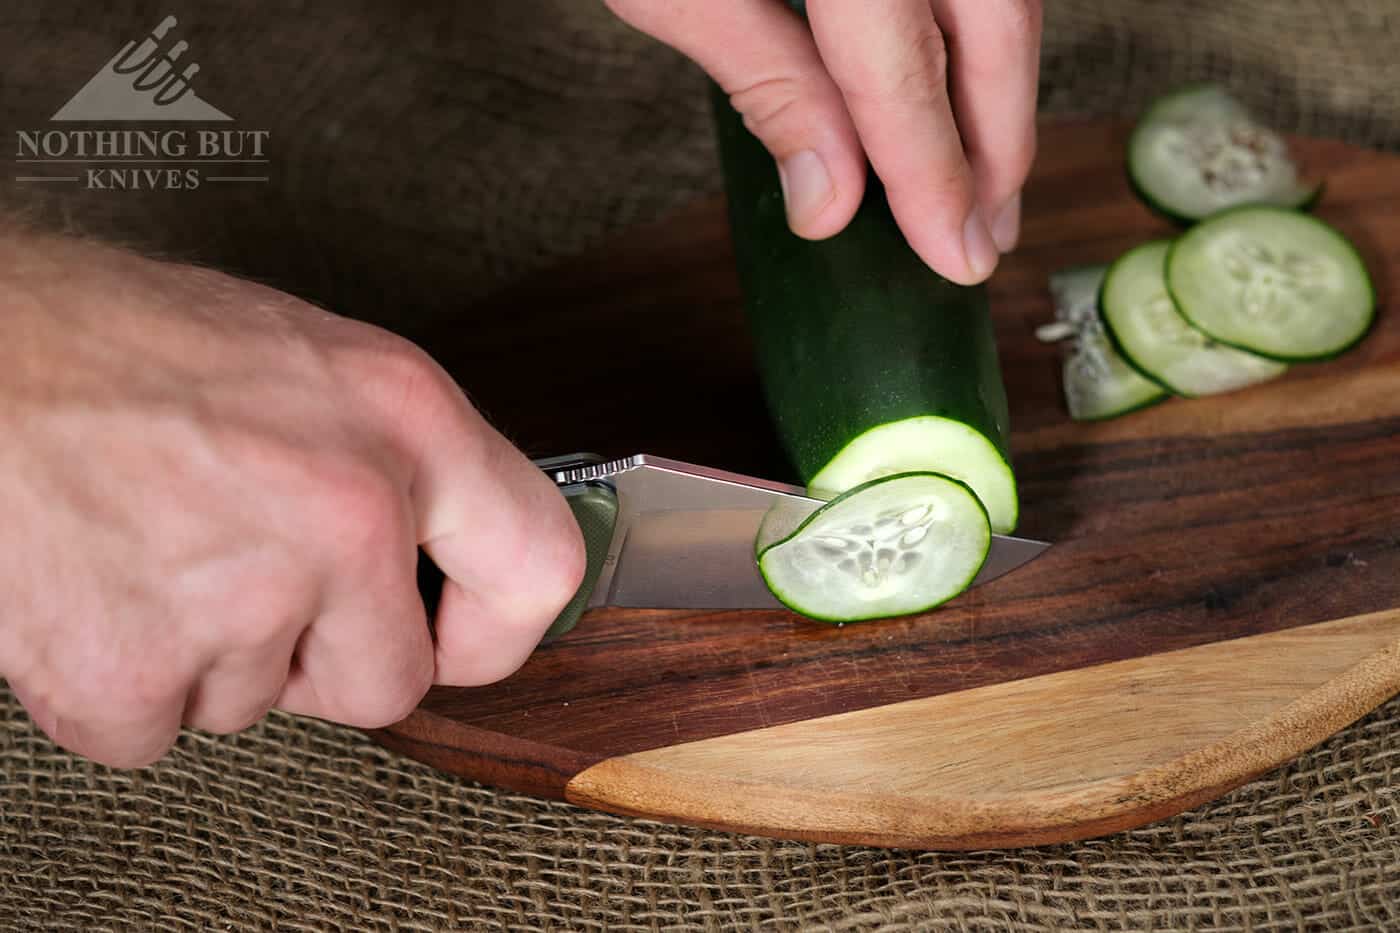 The Off-Grid Rhino slicing a cucumber. 